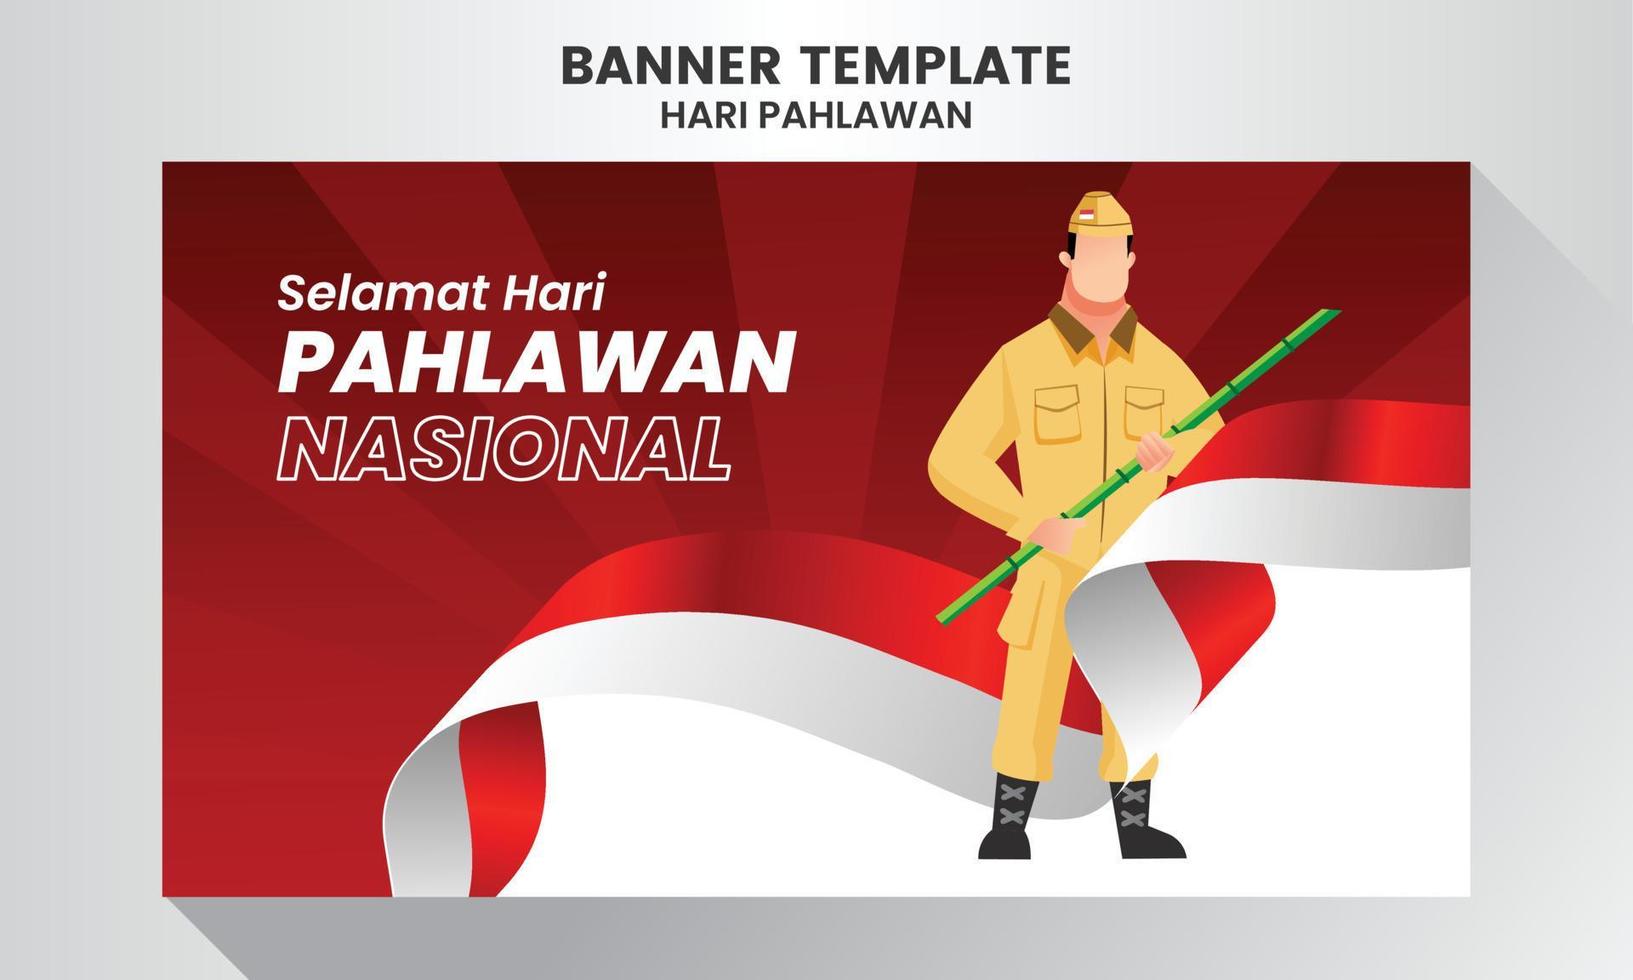 Selamat hari pahlawan nasional. Translation Happy Indonesian National Heroes day. vector illustration